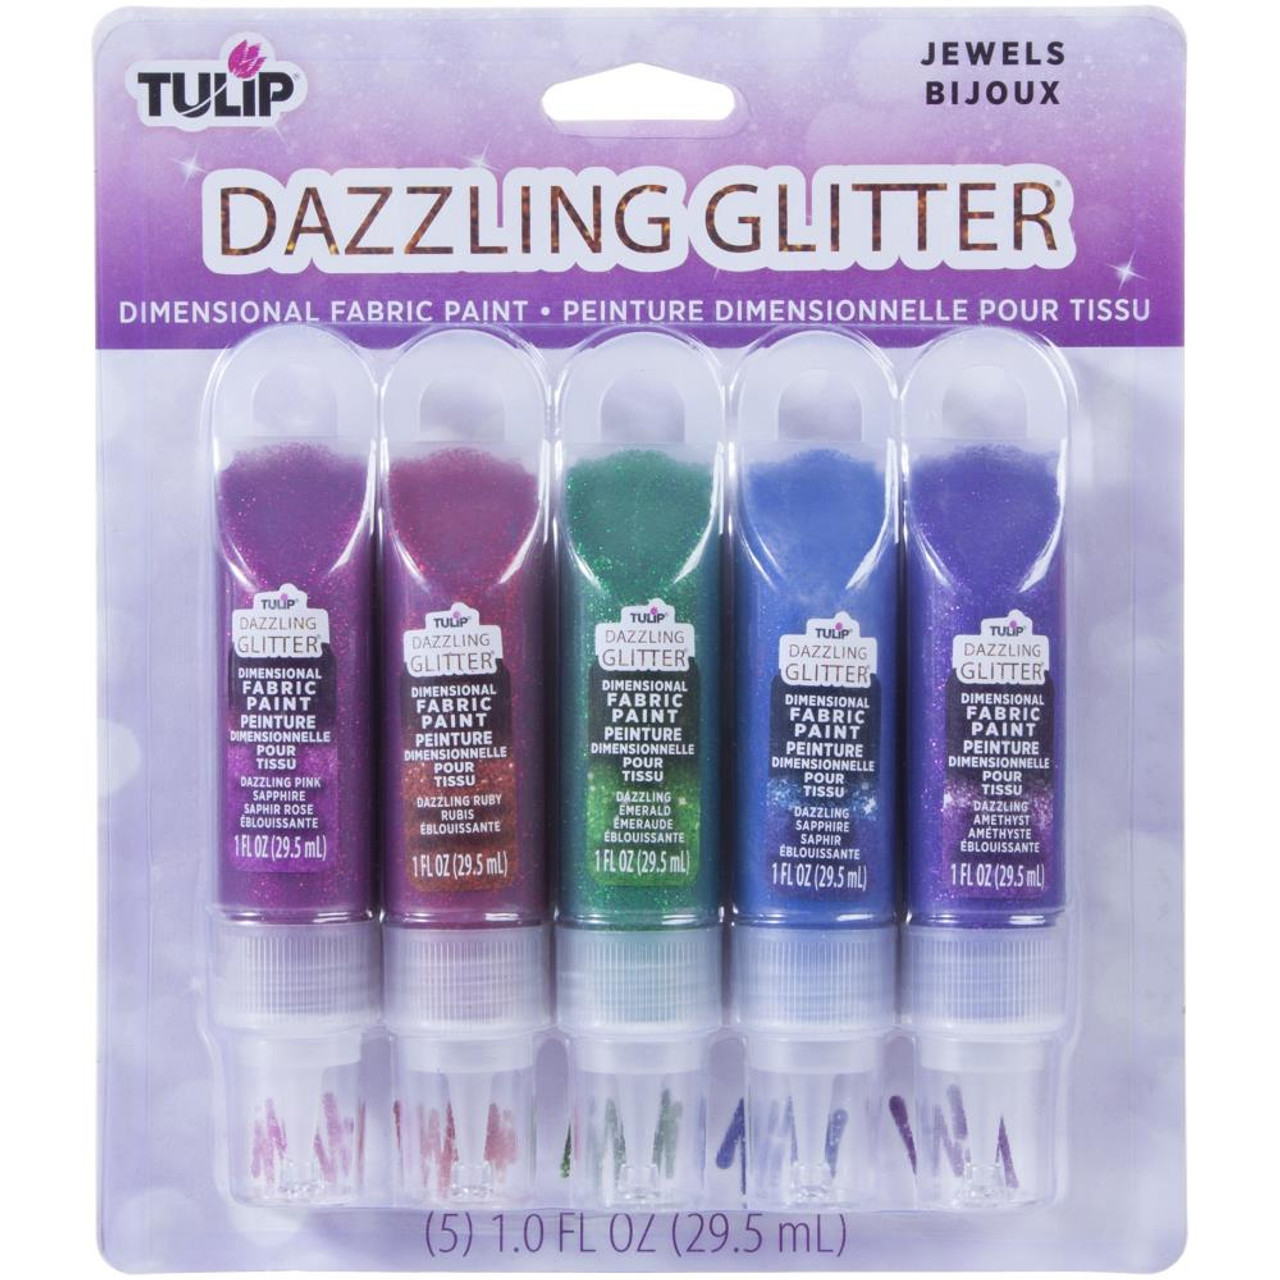 Tulip Dazzling Glitter Dimensional Fabric Paint 2oz 5 Pkg Gems